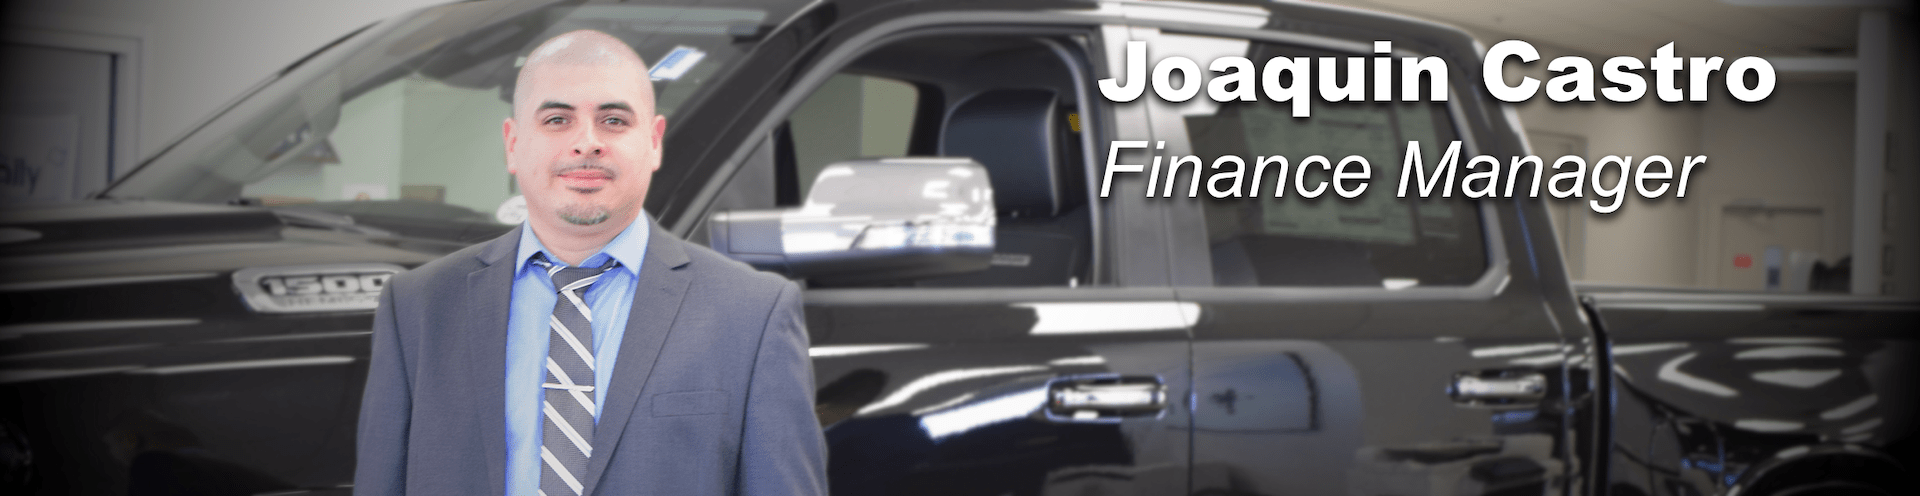 joaquin castro finance manager prestige chrysler dodge jeep ram